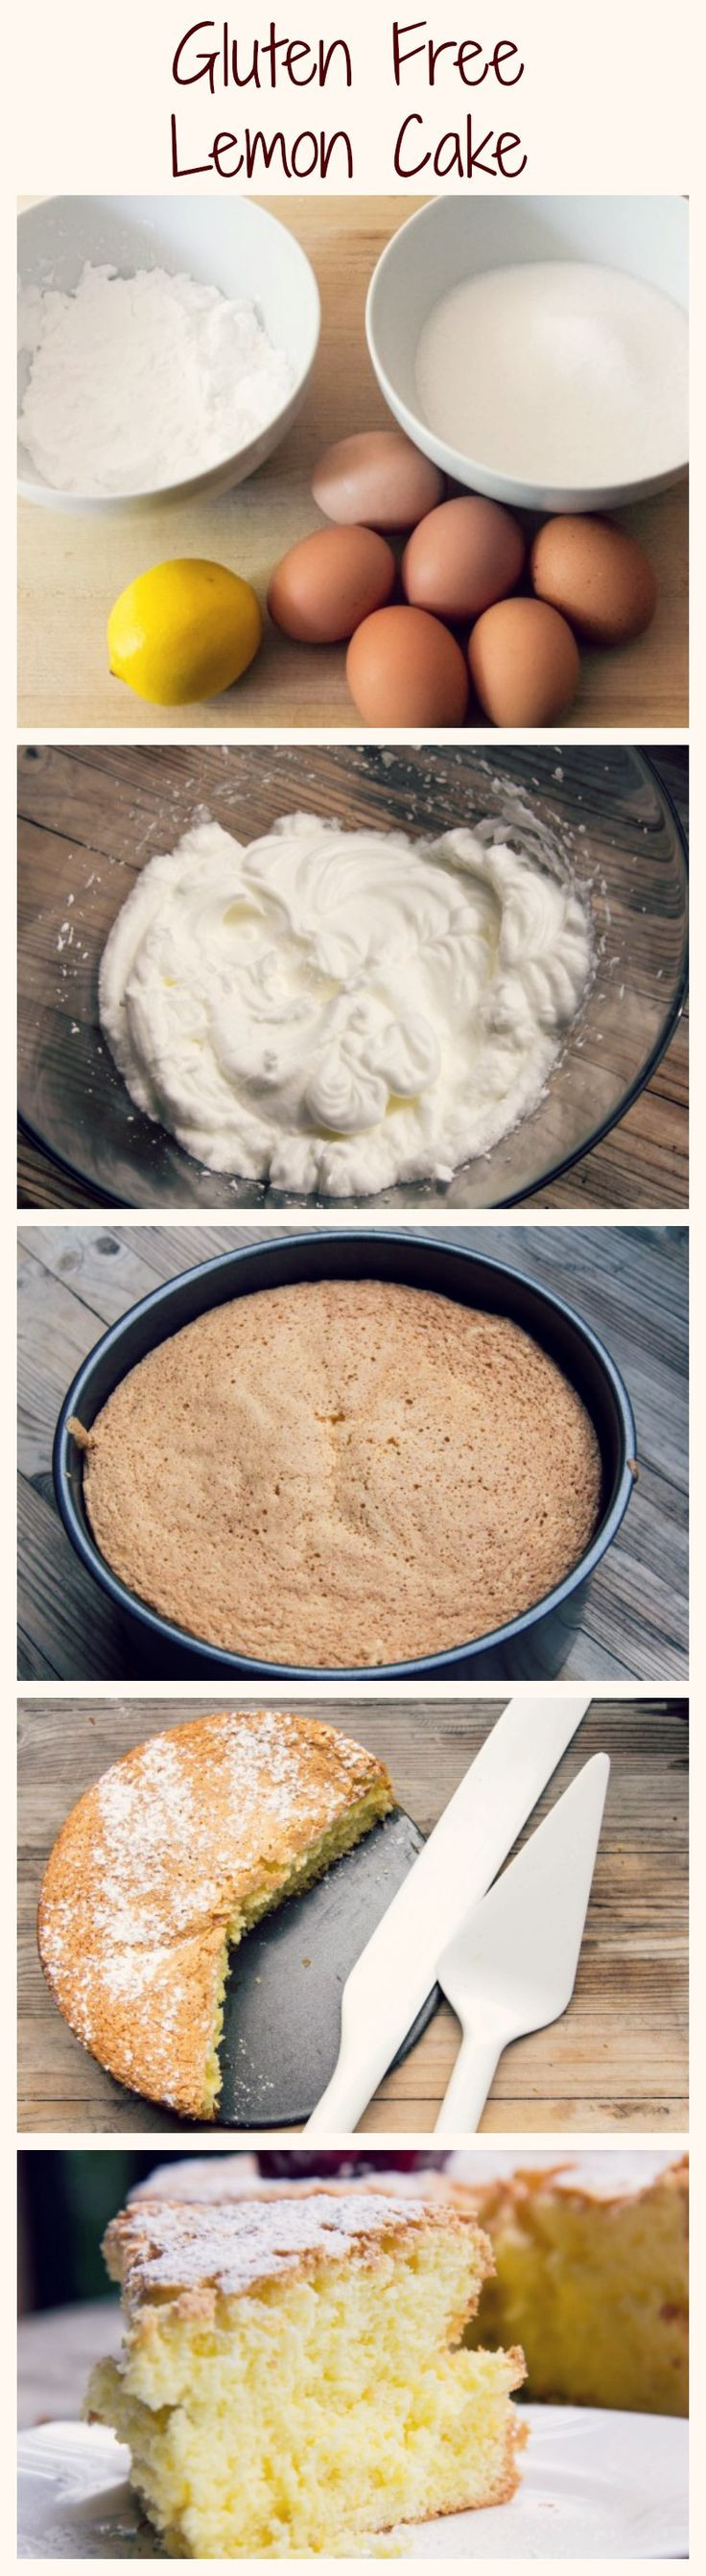 Gluten Free Lemon Cake
 39 best images about Recetas de Tartas on Pinterest